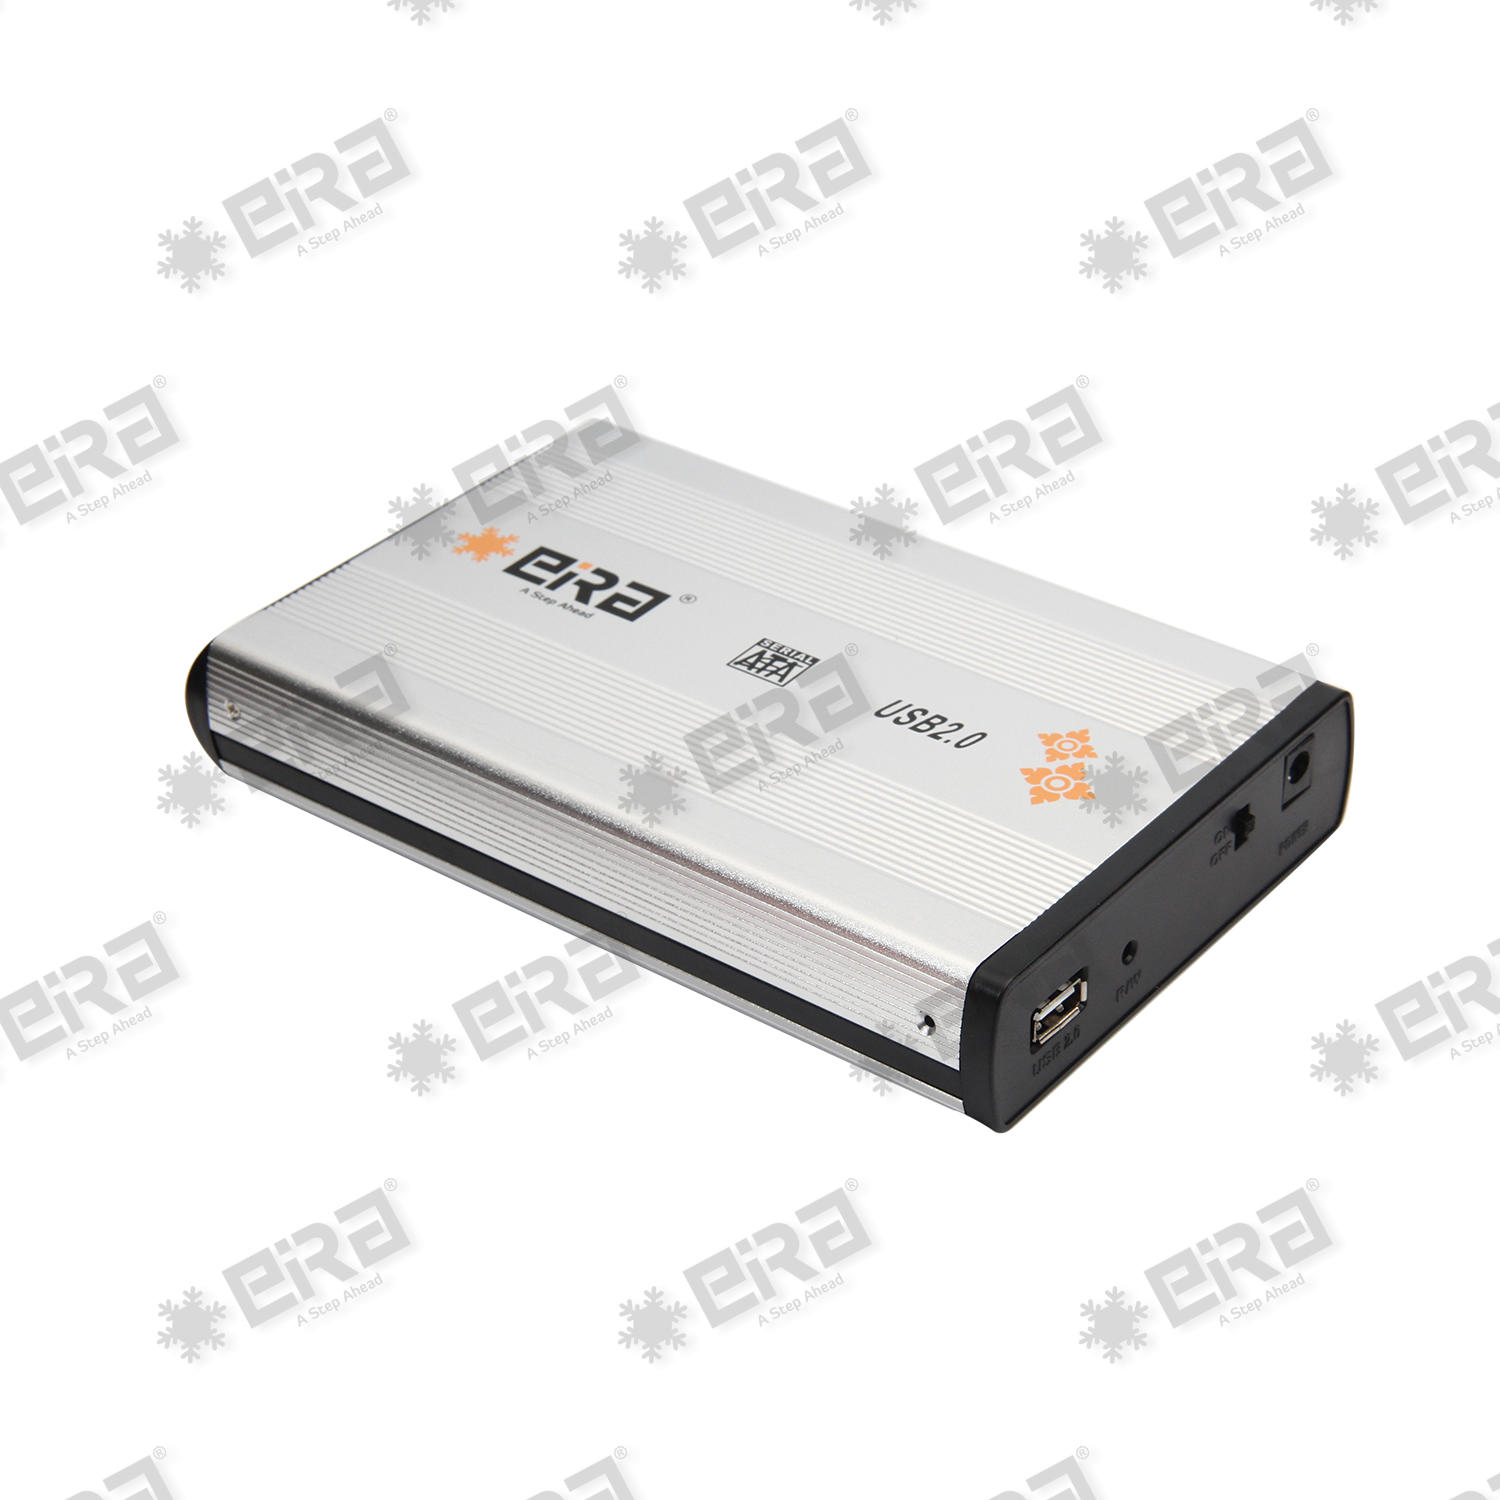 3.5 Mobile Hard Disk Enclosure - SATA to USB 2.0 – Computer Express